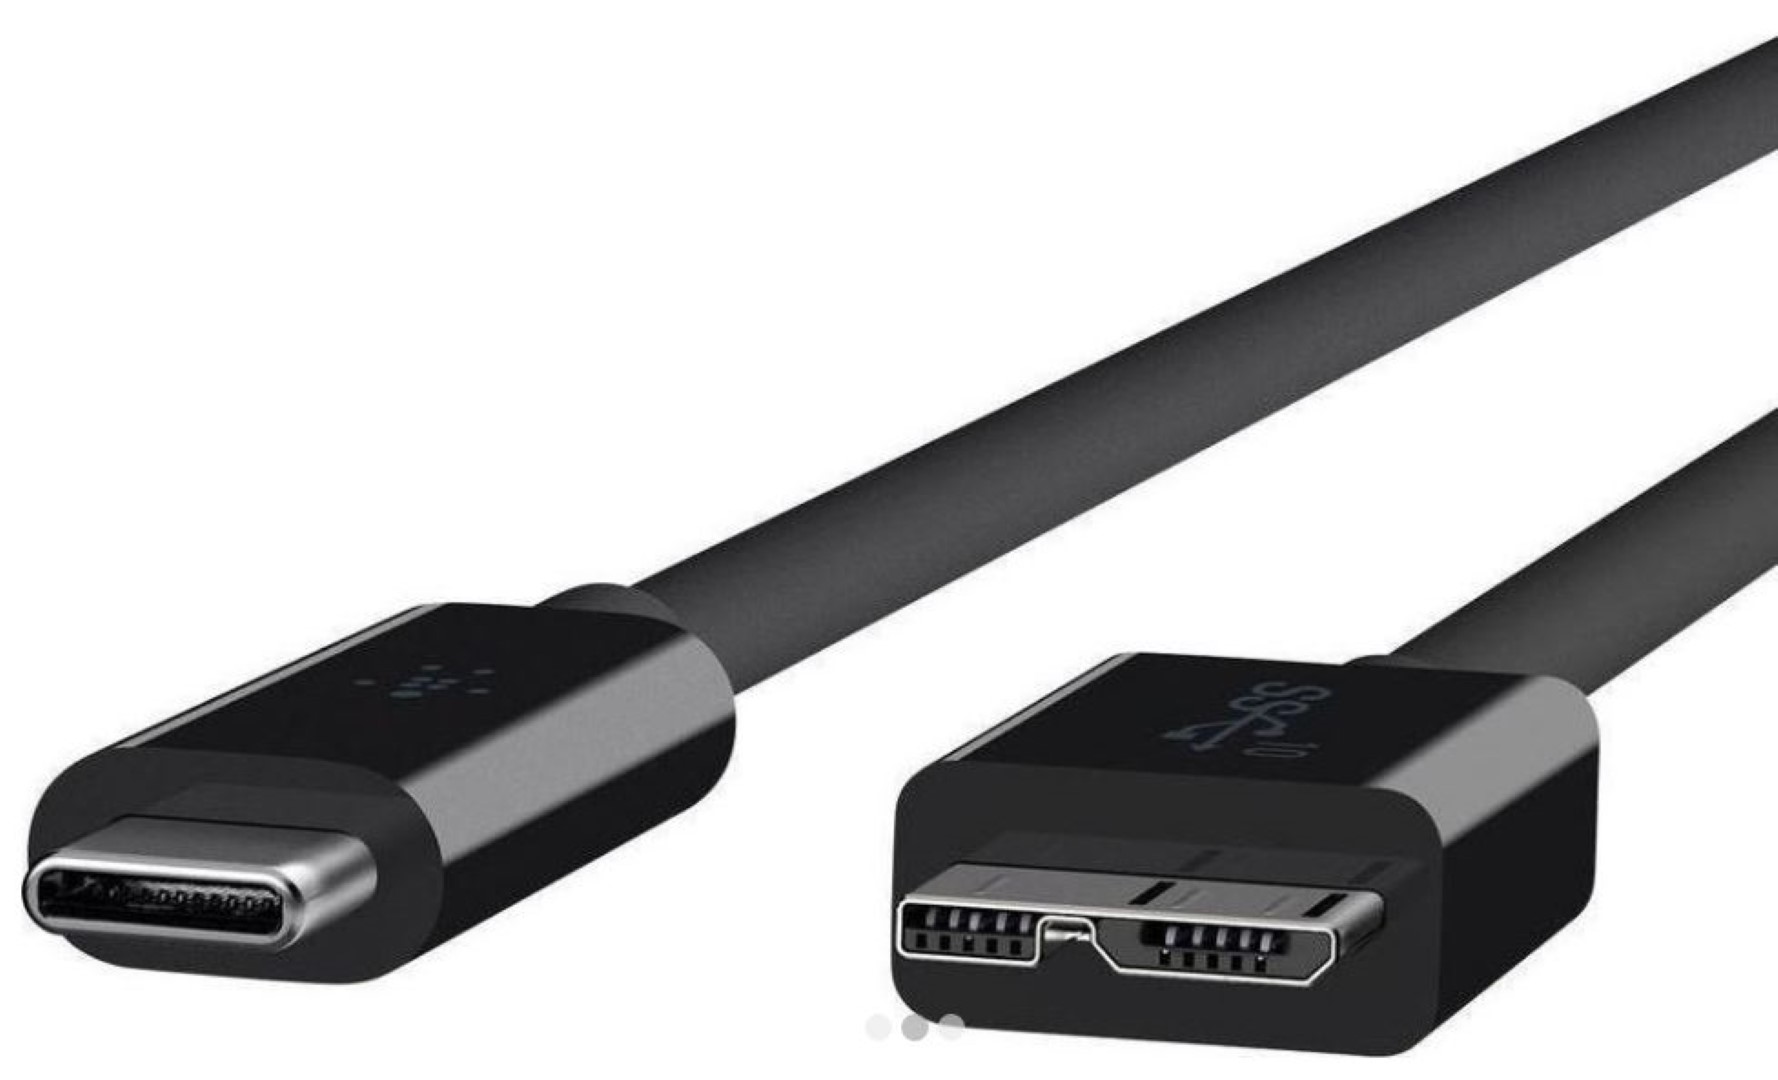 USB Adapter Cameron Sino AS-MC510 USB Plug to Micro USB Cable 20cm New Usb USB Adapter (Copy)